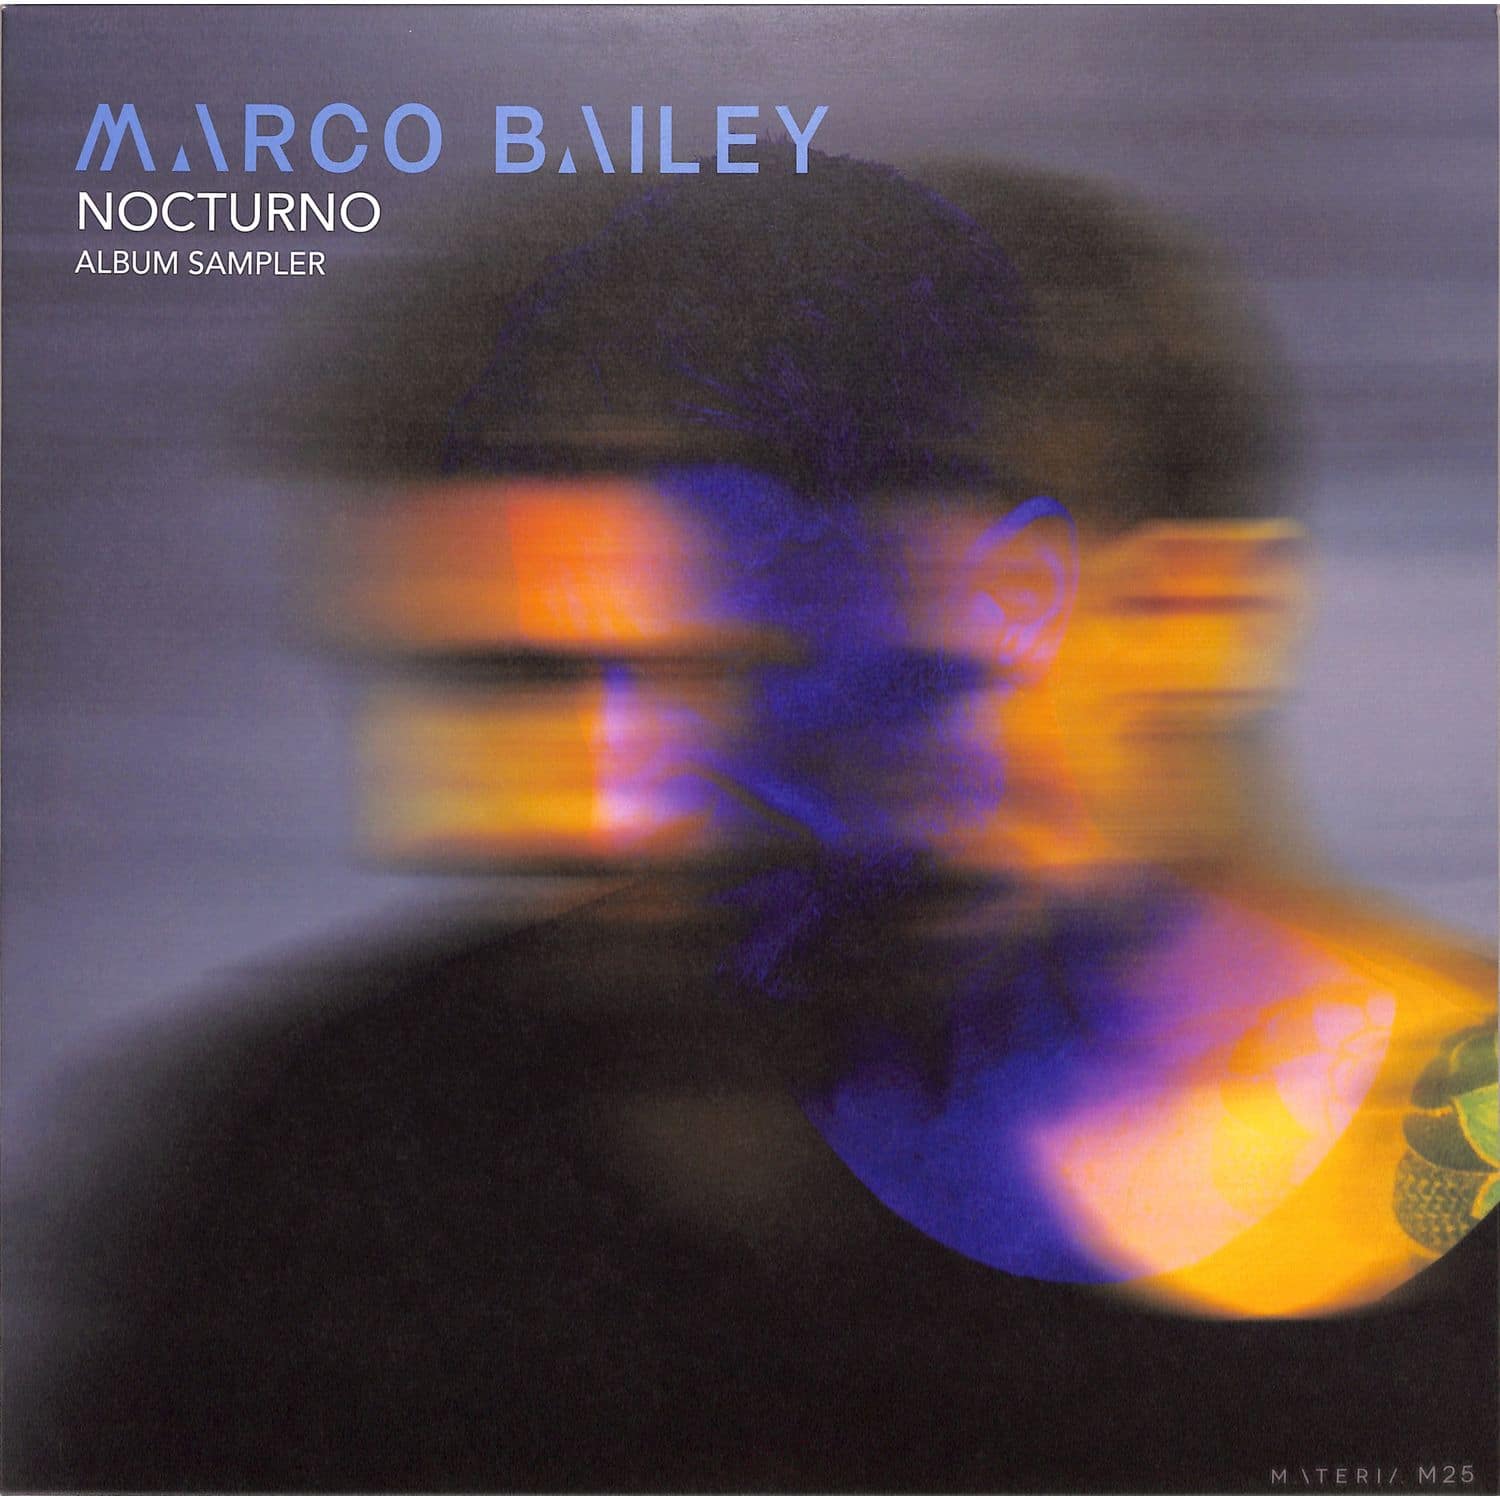 Marco Bailey - NOCTURNO ALBUM SAMPLER 